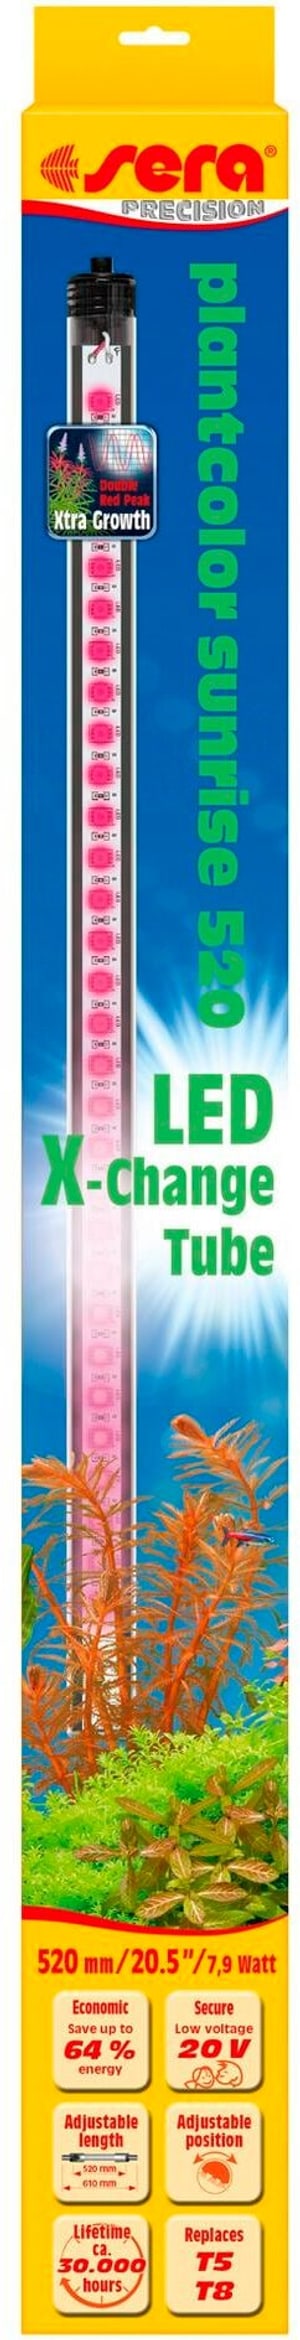 Ampoule LED X-Change Tube PCS, 520 mm, 7.9 W